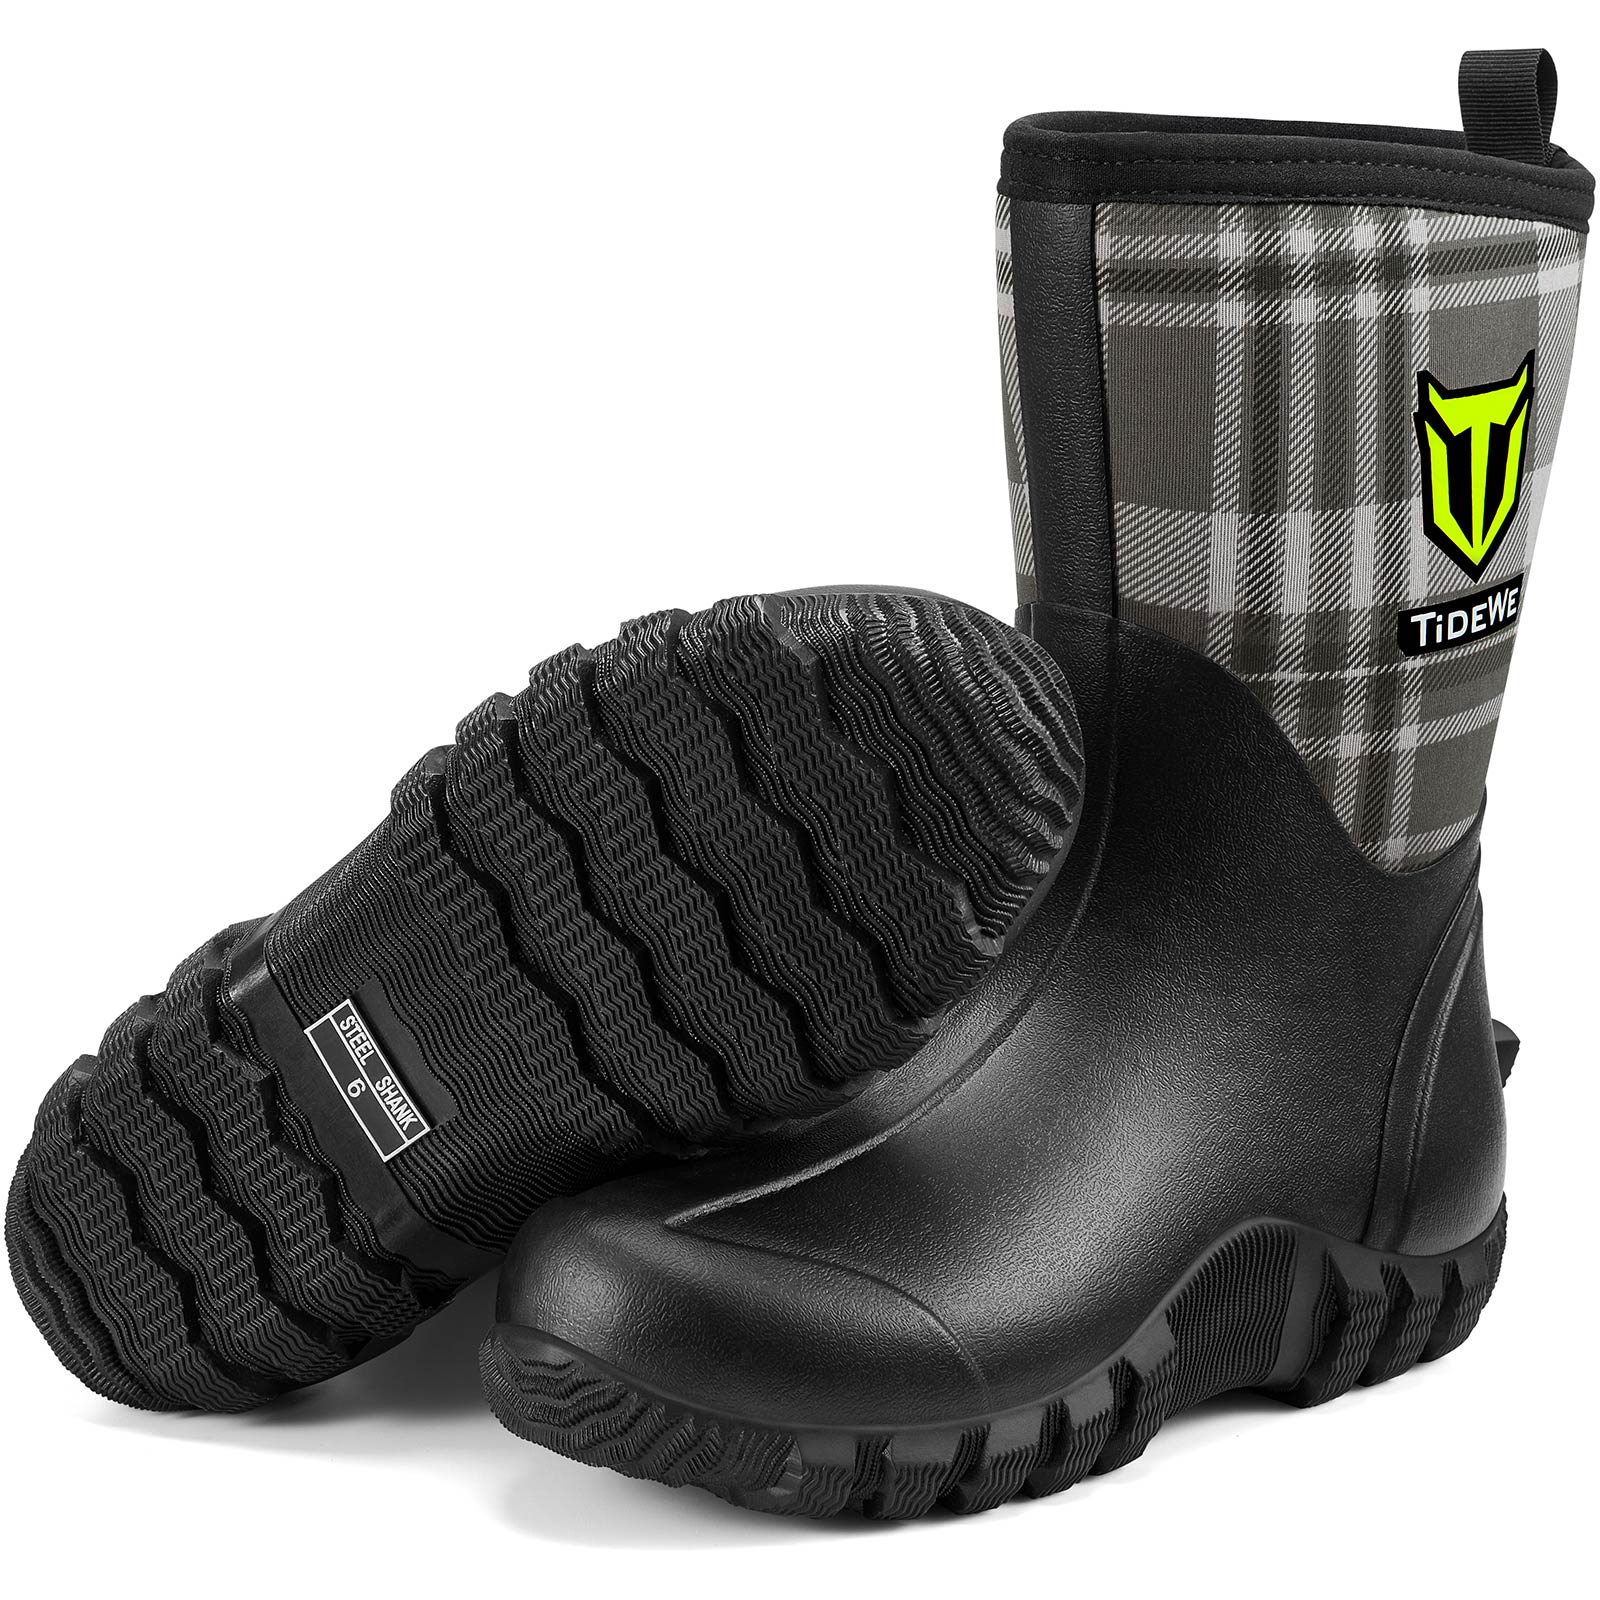 WTW unisex Rain Boots for Men and Women, Waterproof Rubber Fishing Deck Boots Neoprene Boots Slip On Ankle Garden Shoes